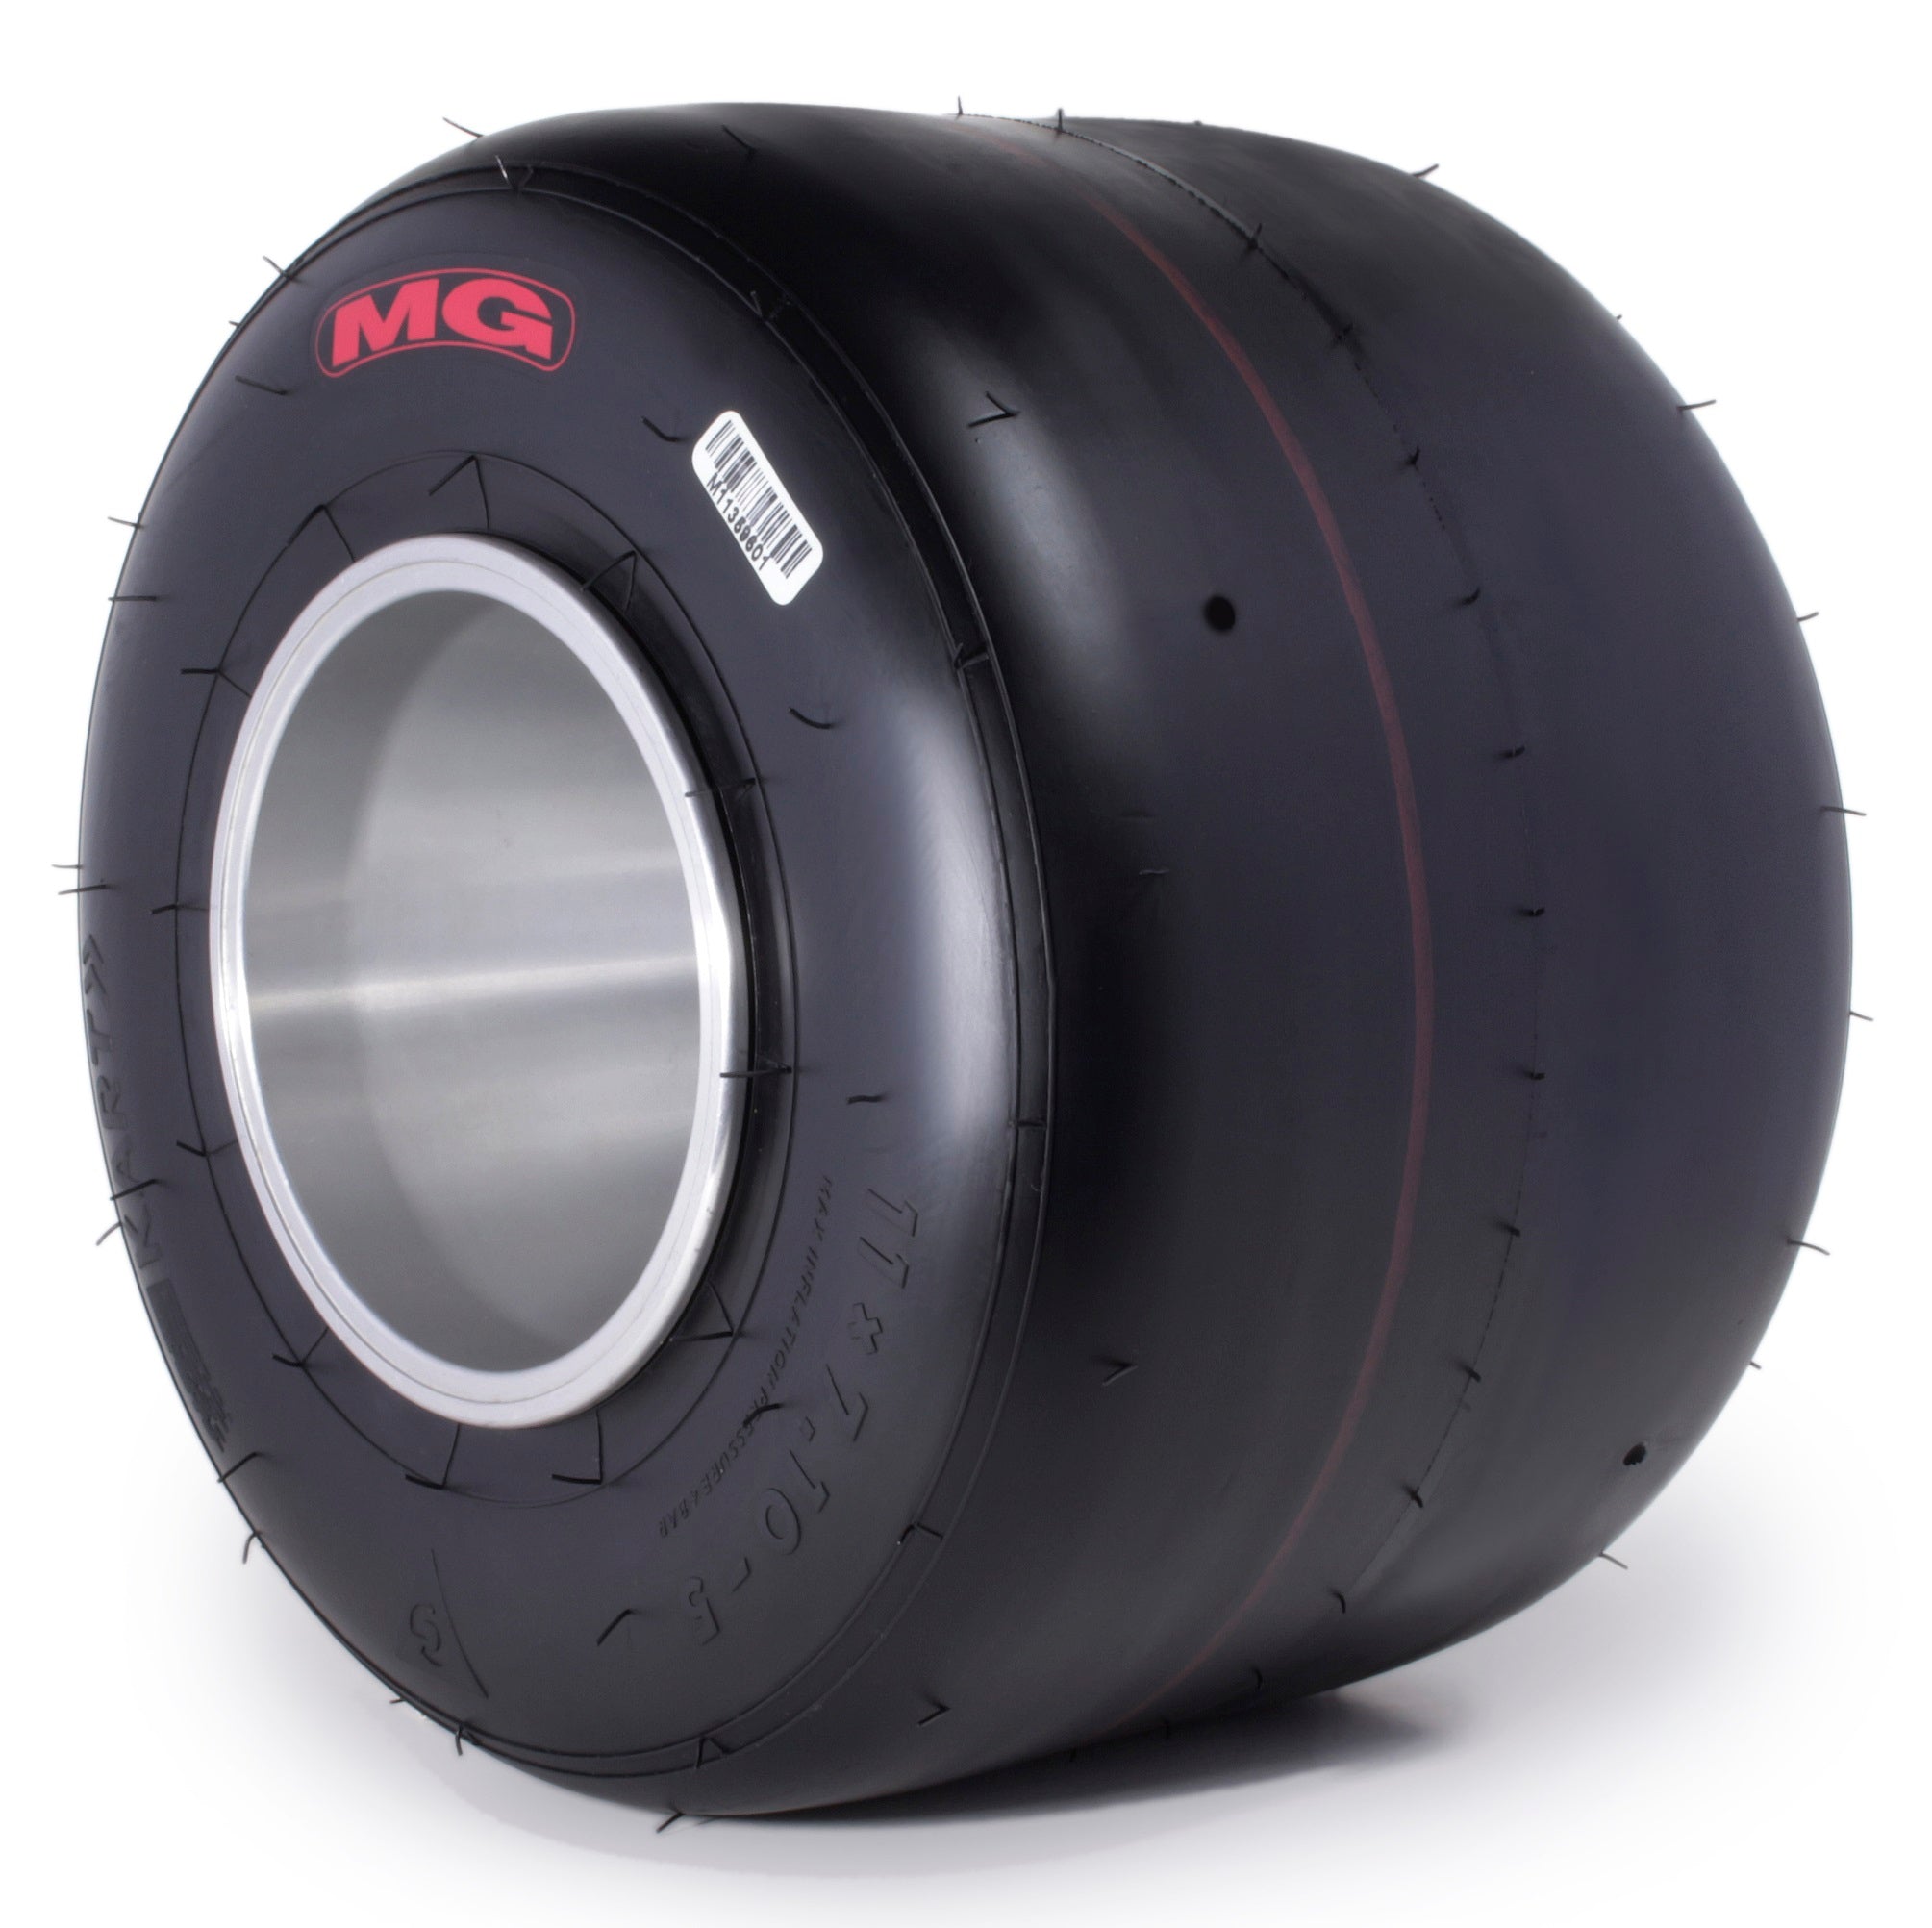 MG Tyre SH CIK/FIA 2020